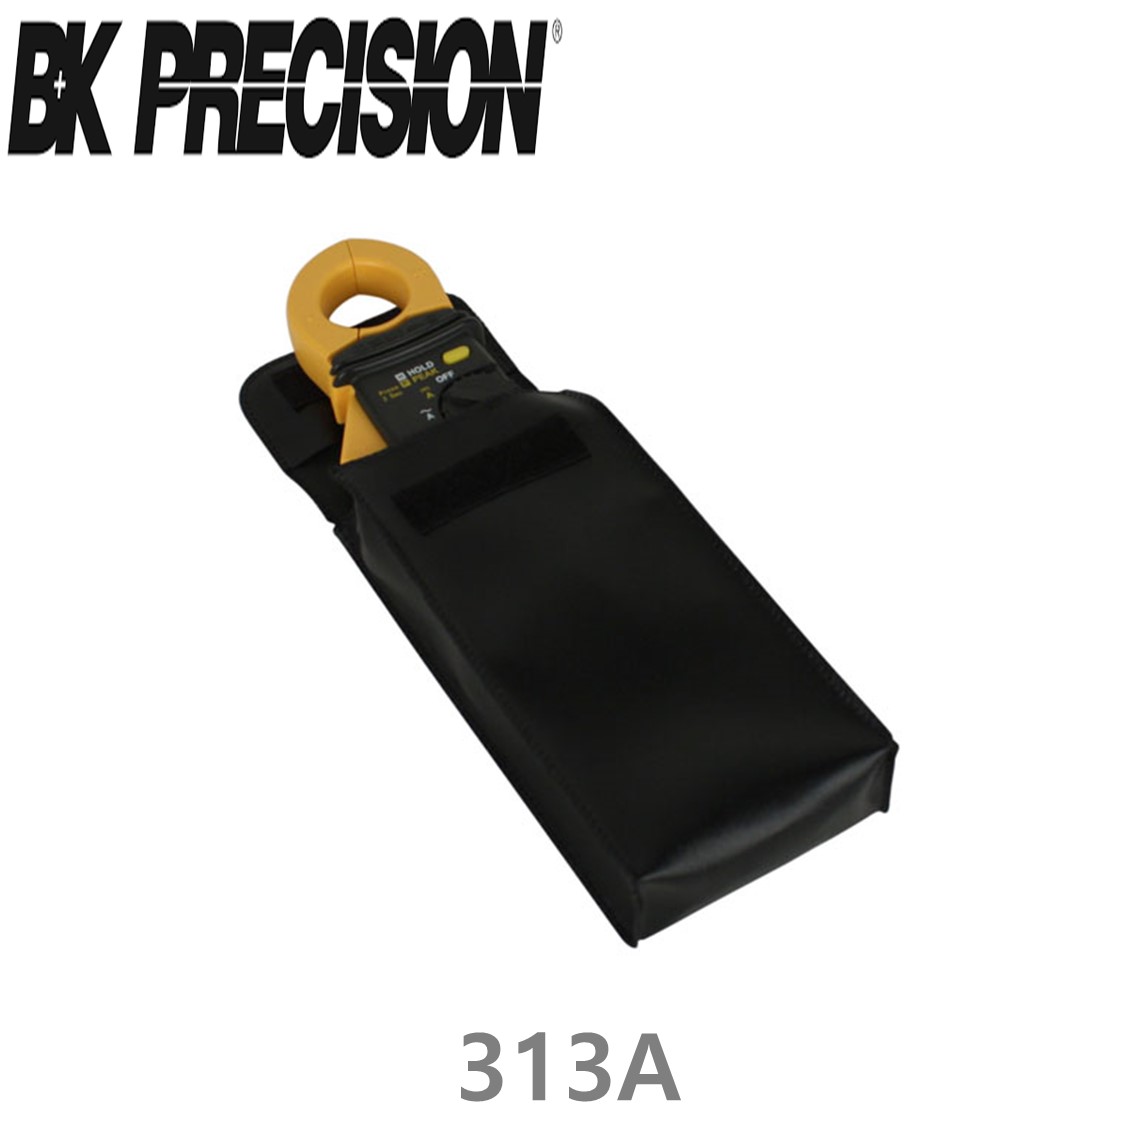 [ BK Precision ] 313A  미니 AC/DC 밀리 앰프 클램프미터 600A